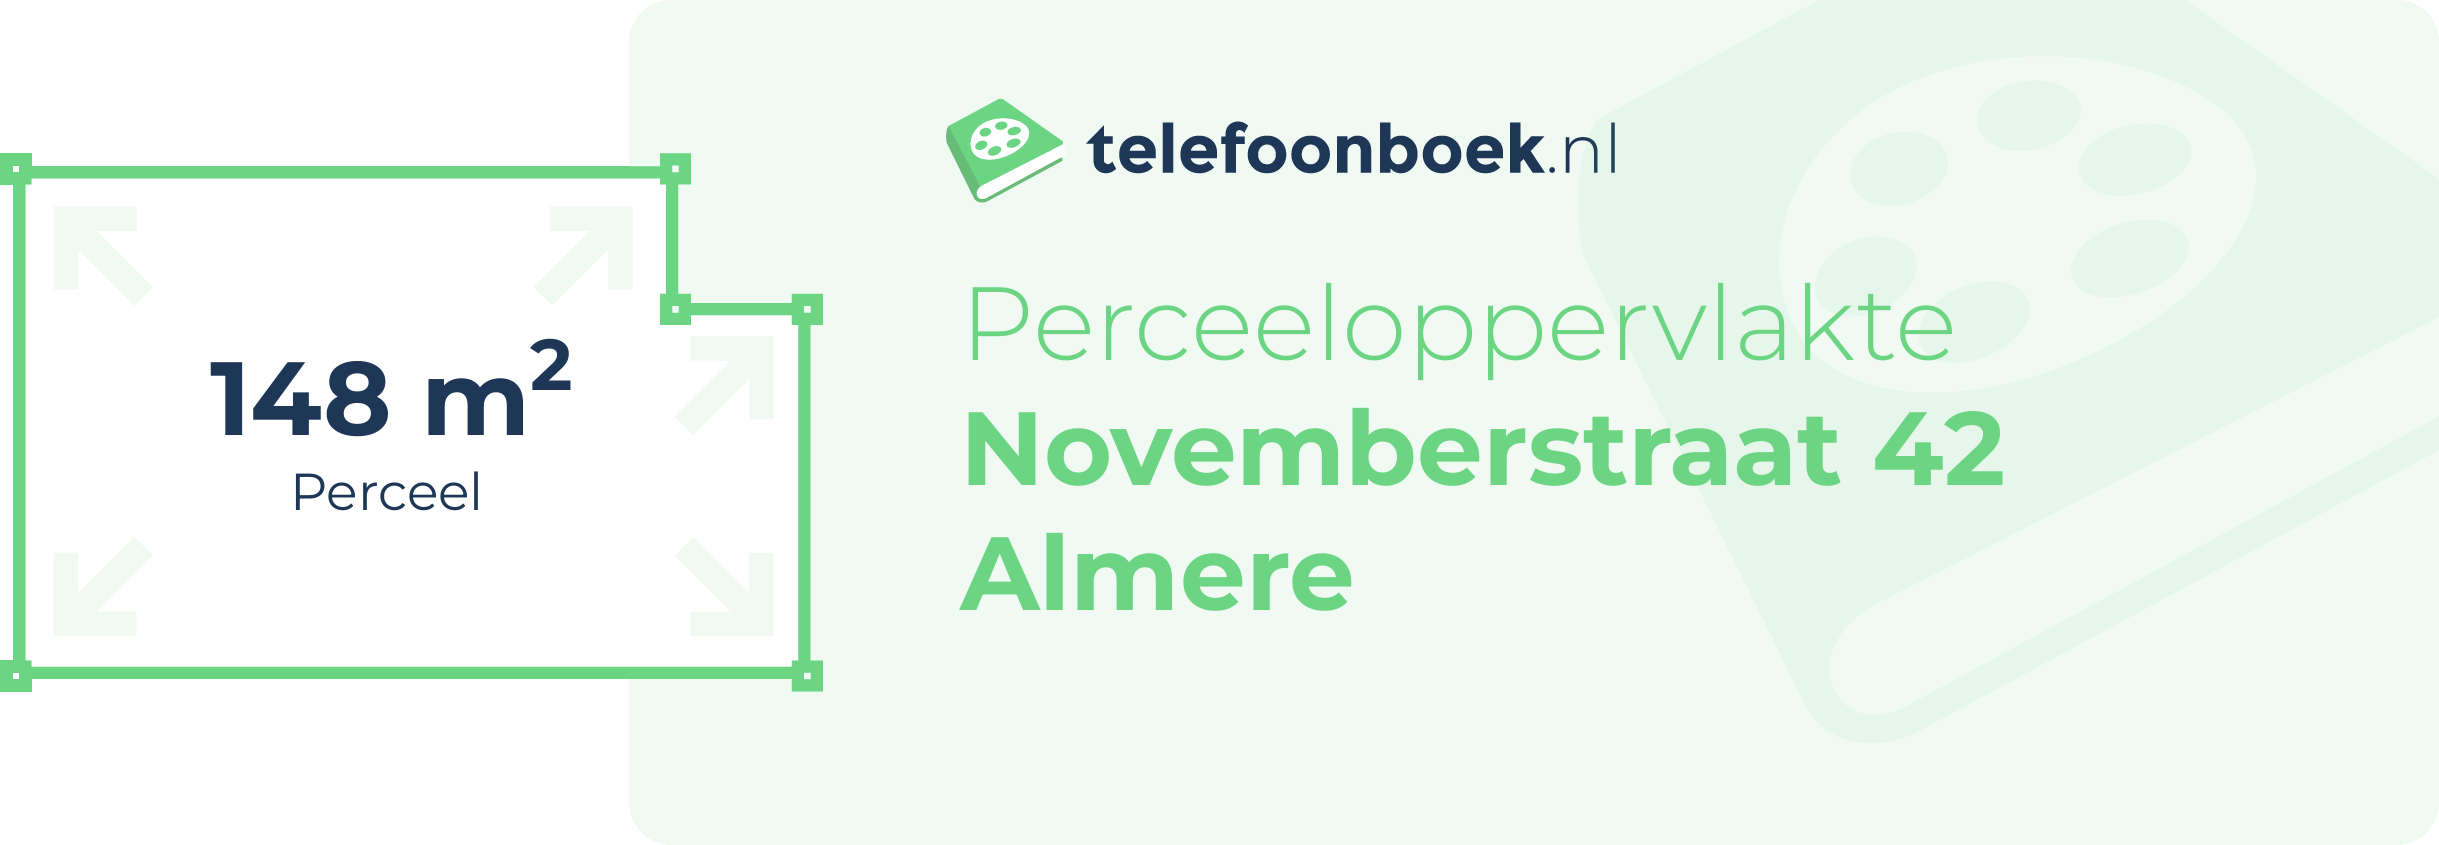 Perceeloppervlakte Novemberstraat 42 Almere